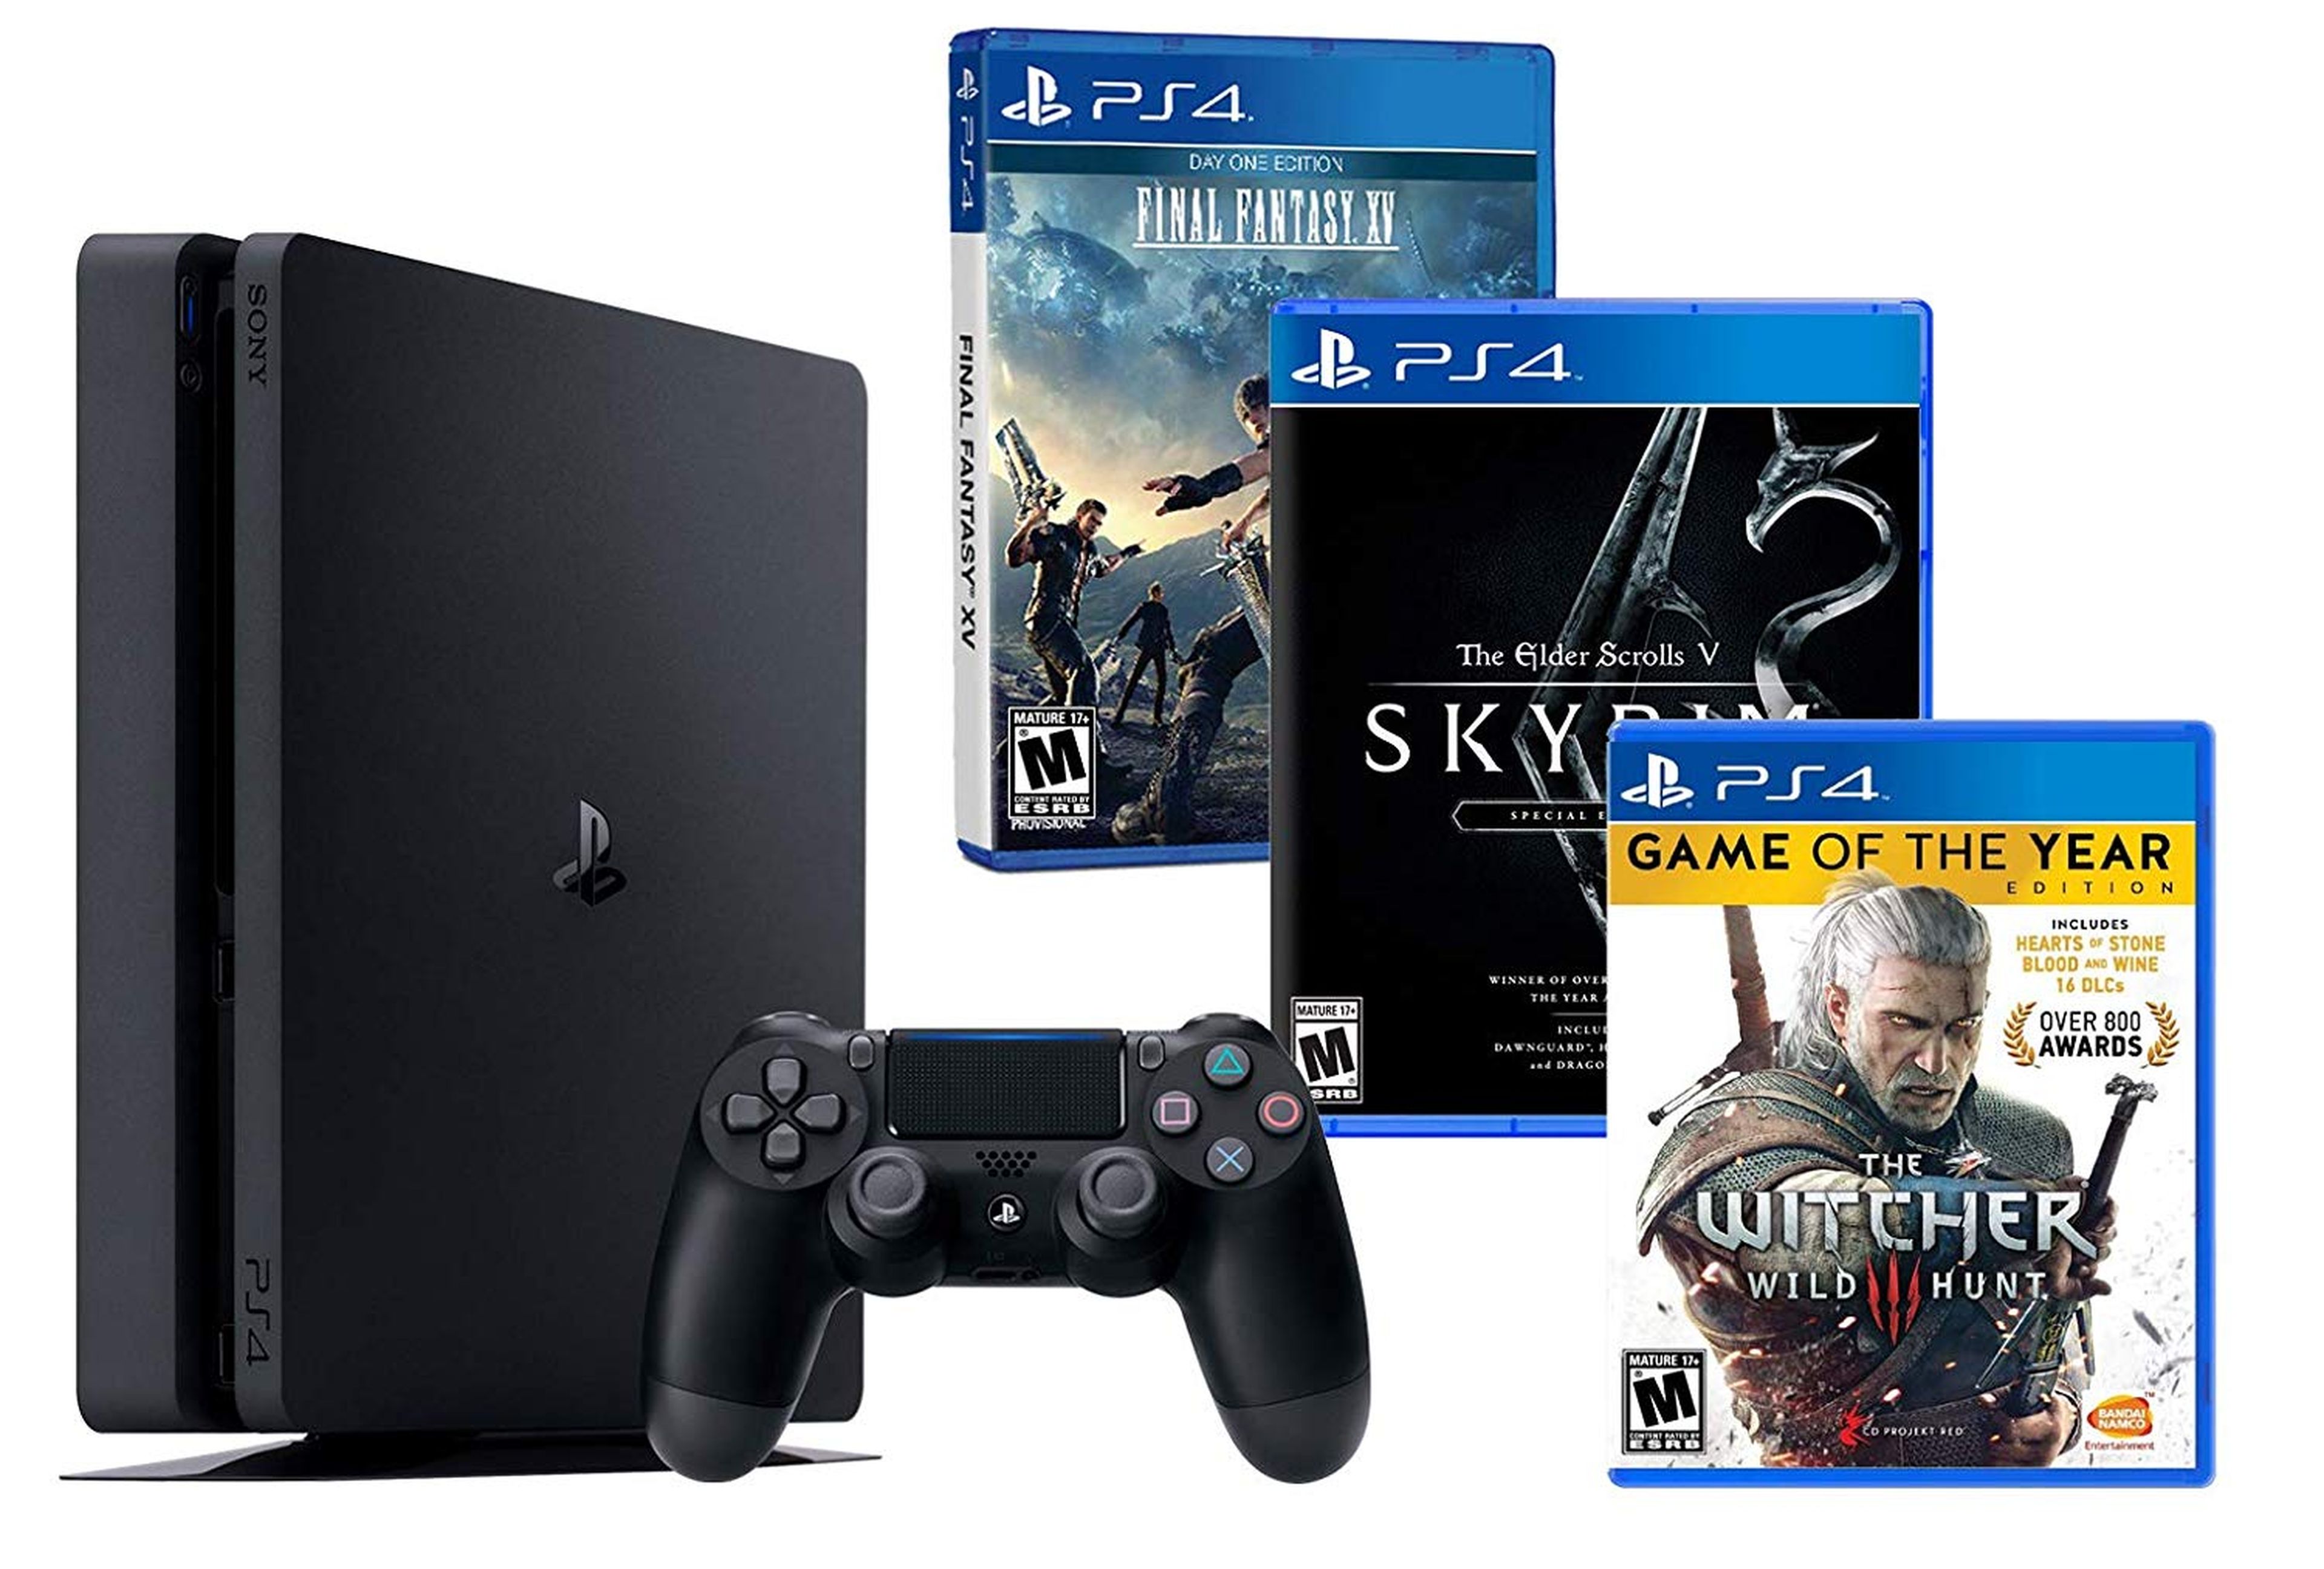 Pack PlayStation 3 de 1TB con The Witcher 3, Final Fantasy XV y The Elder Scrolls V: Skyrim Special Edition